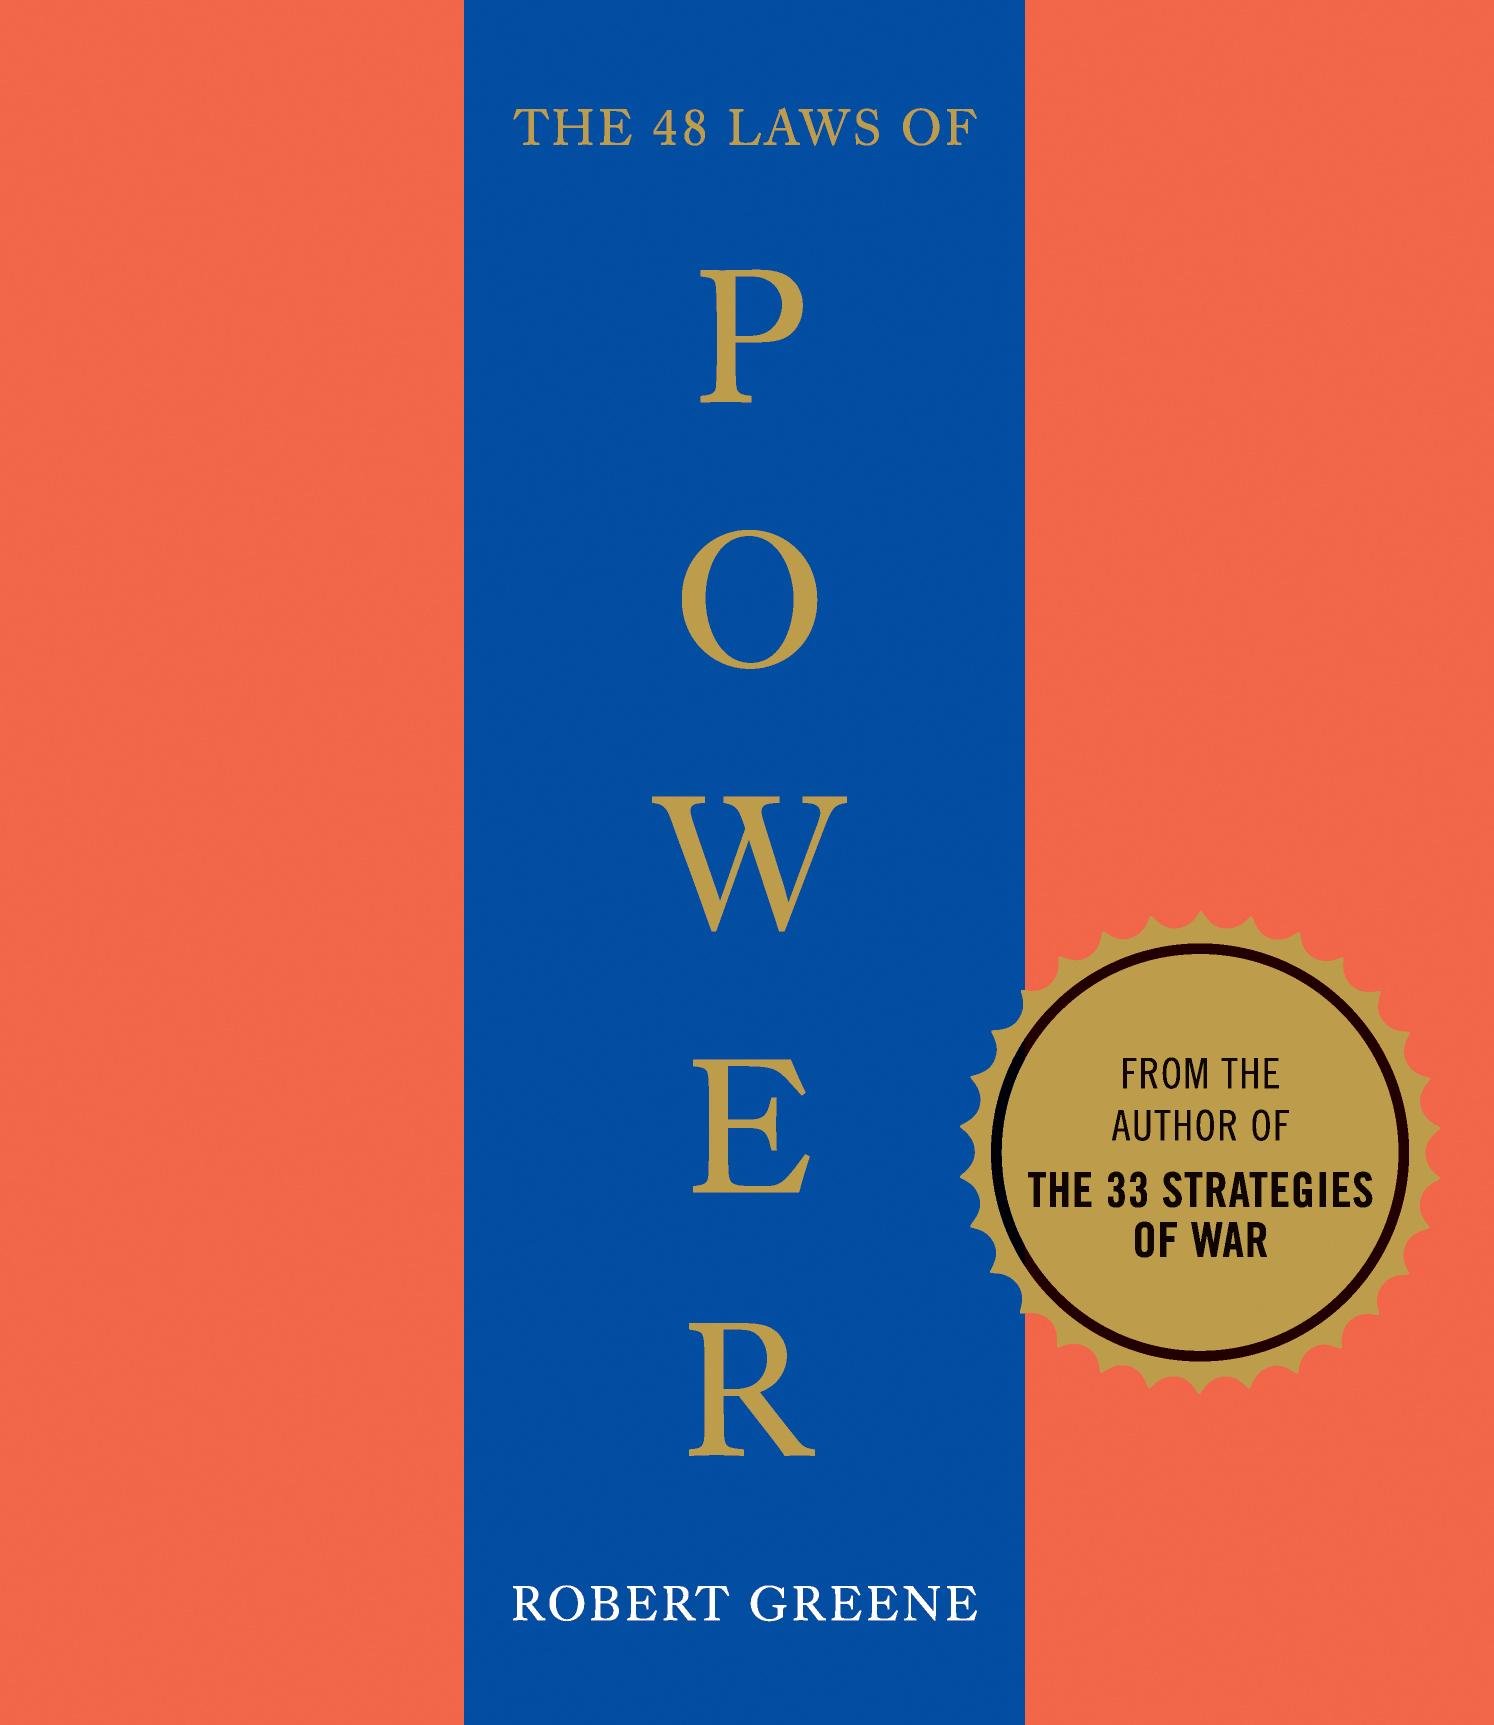 Don Leslie, Robert Greene: The 48 laws of power (AudiobookFormat, 2007, HighBridge Company; Abridged)